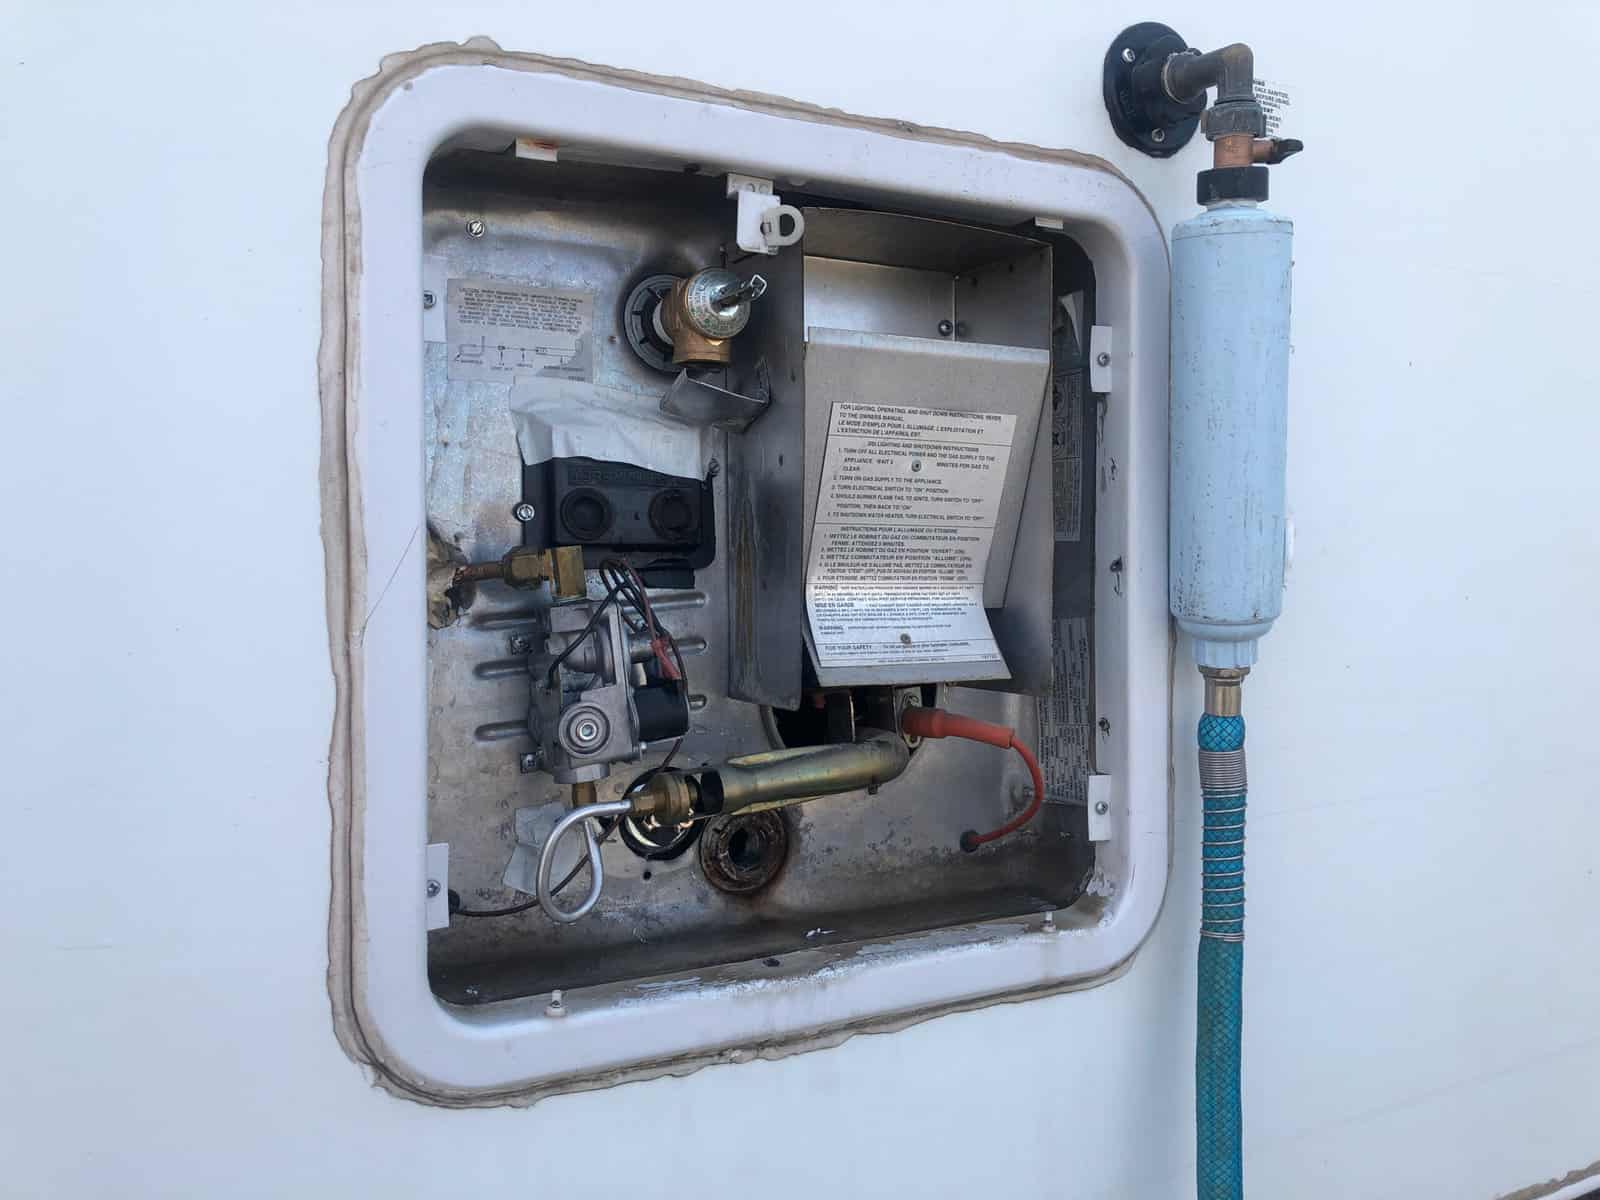 RV water heater troubleshooting